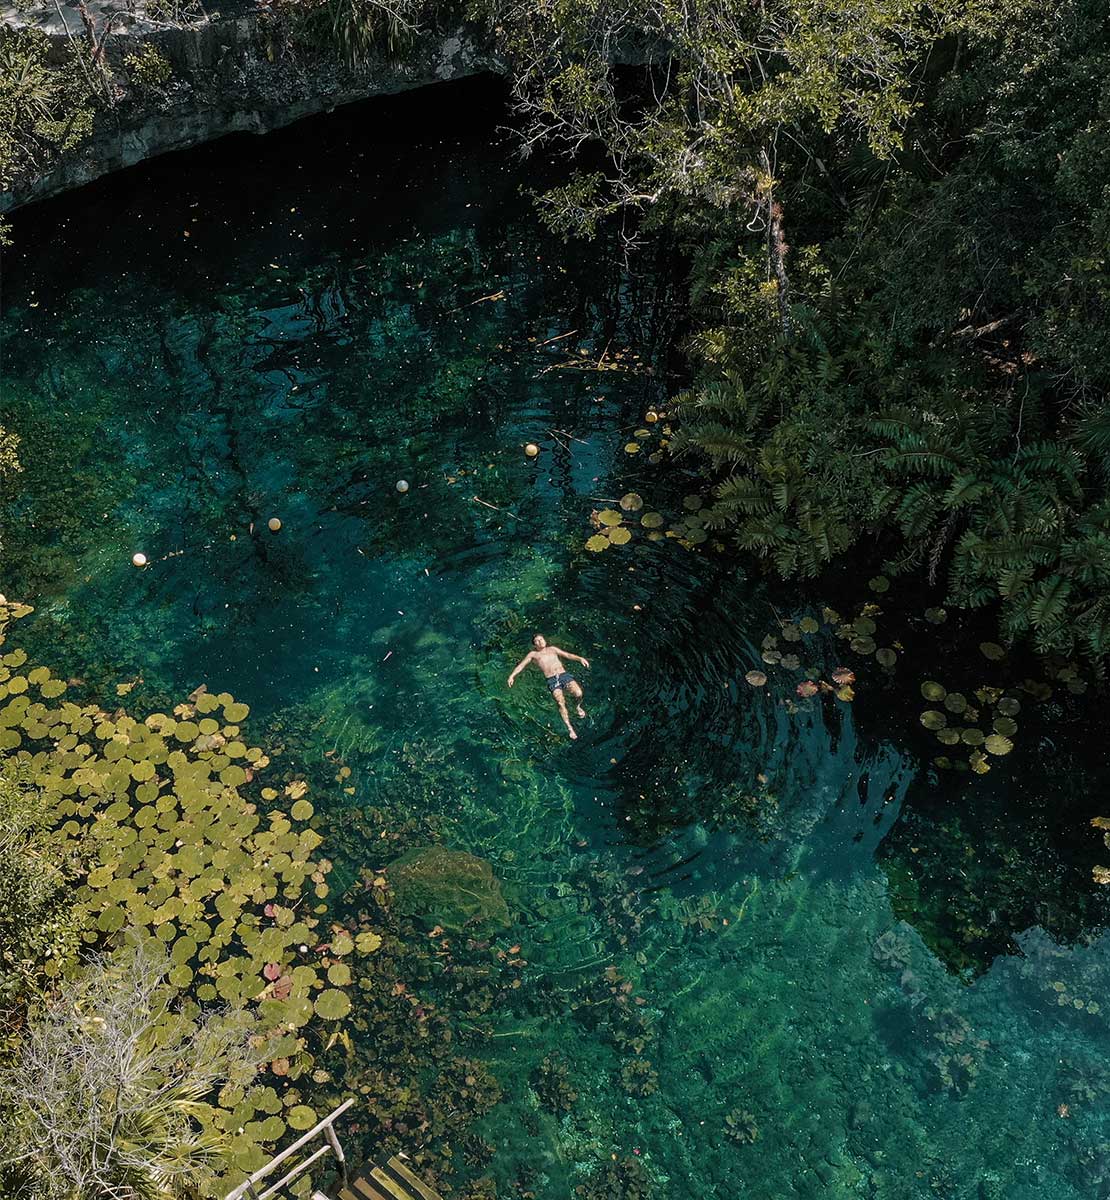 Cenote Tankah